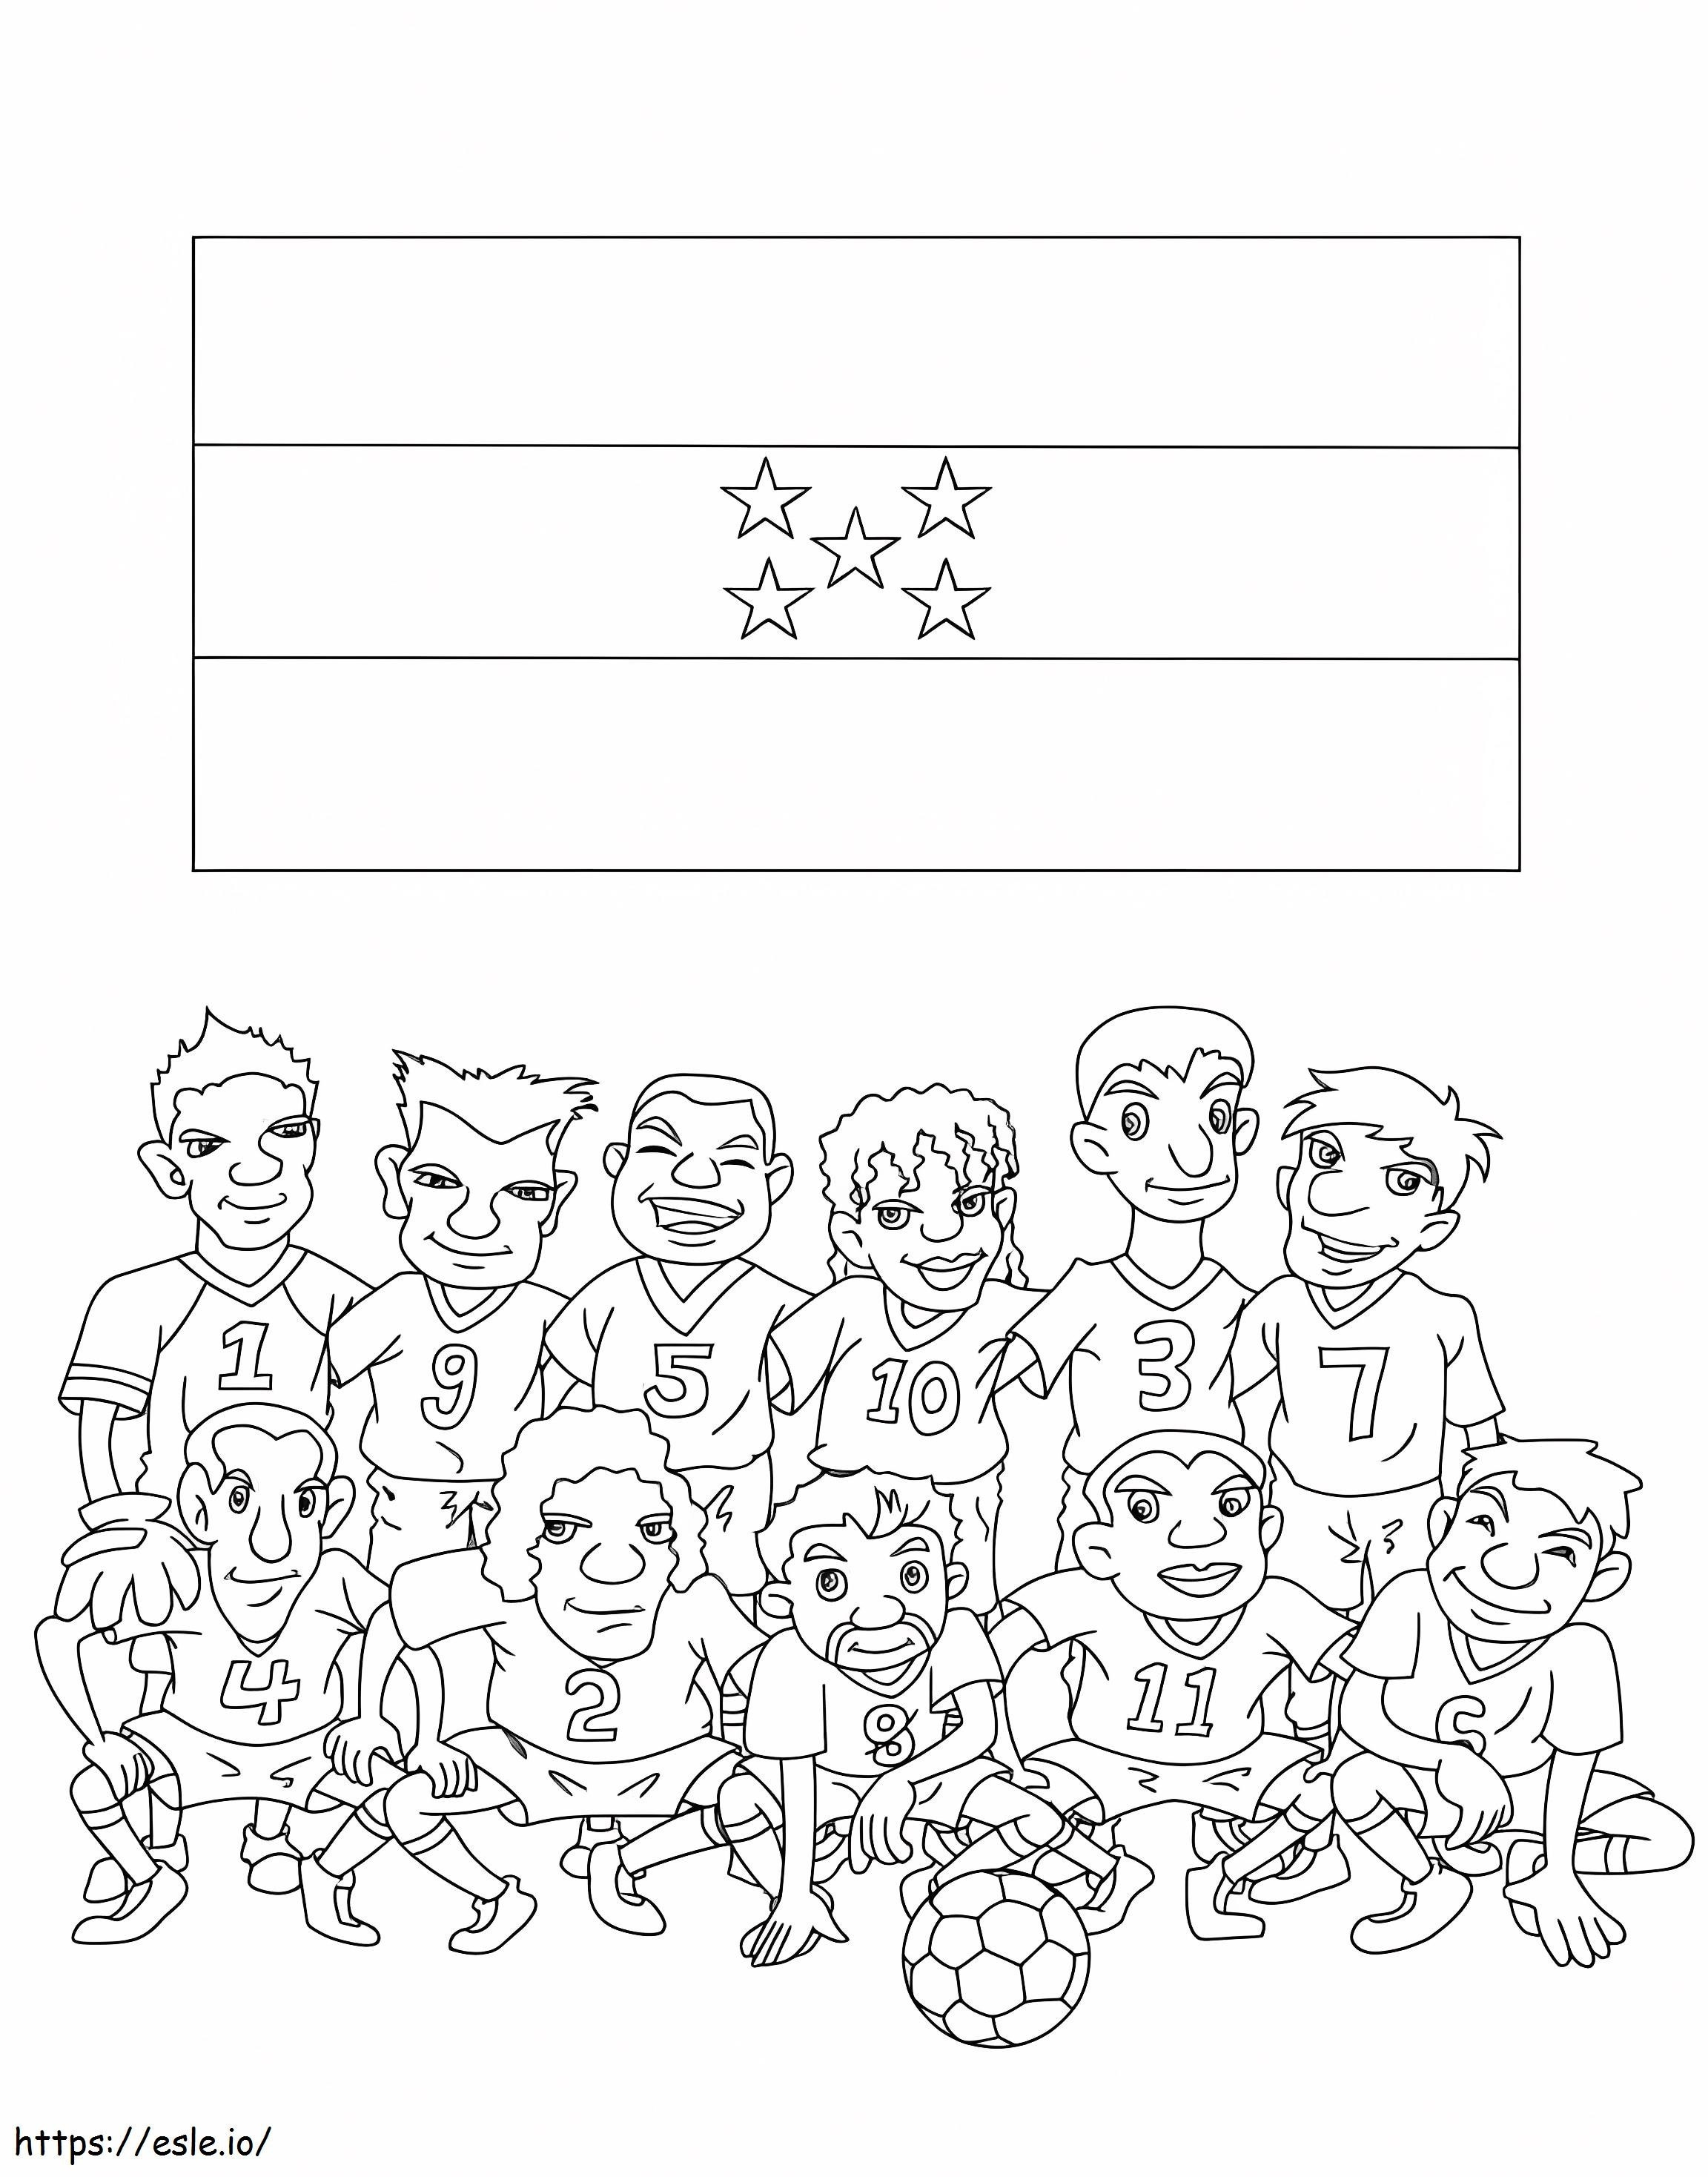 Honduras National Football Team coloring page